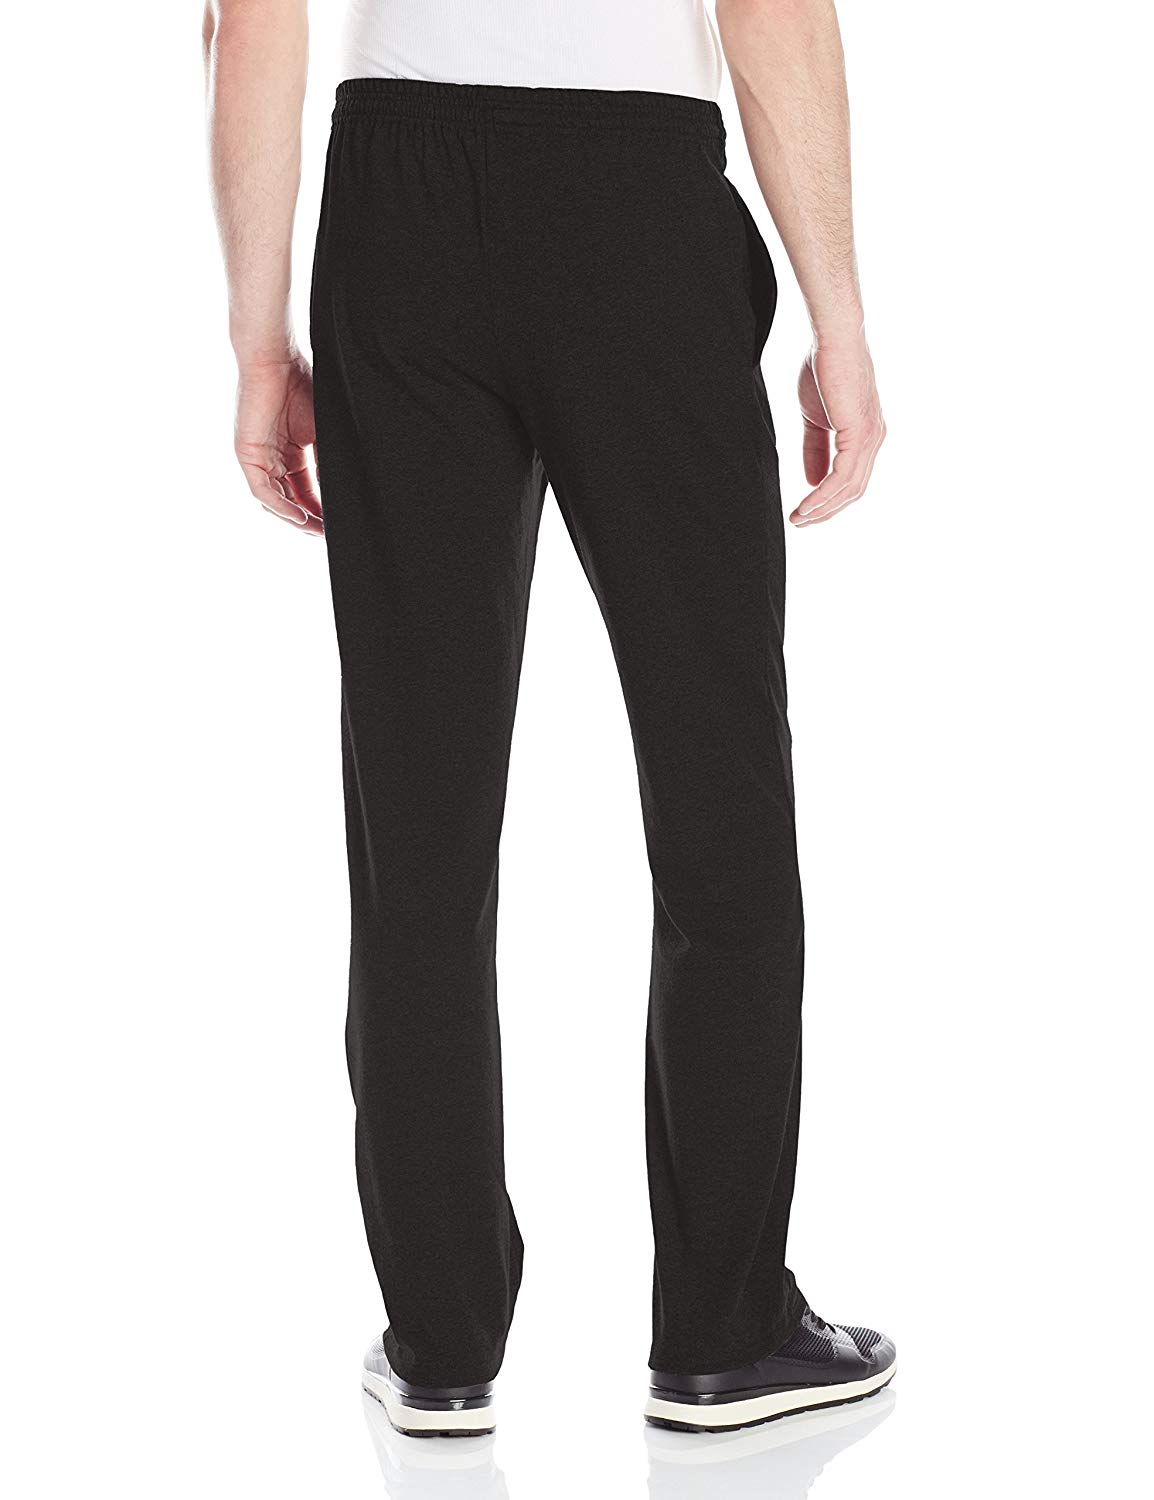 Hanes Men's Jersey Pant, Black, Large, Black, Size Large udUf | eBay